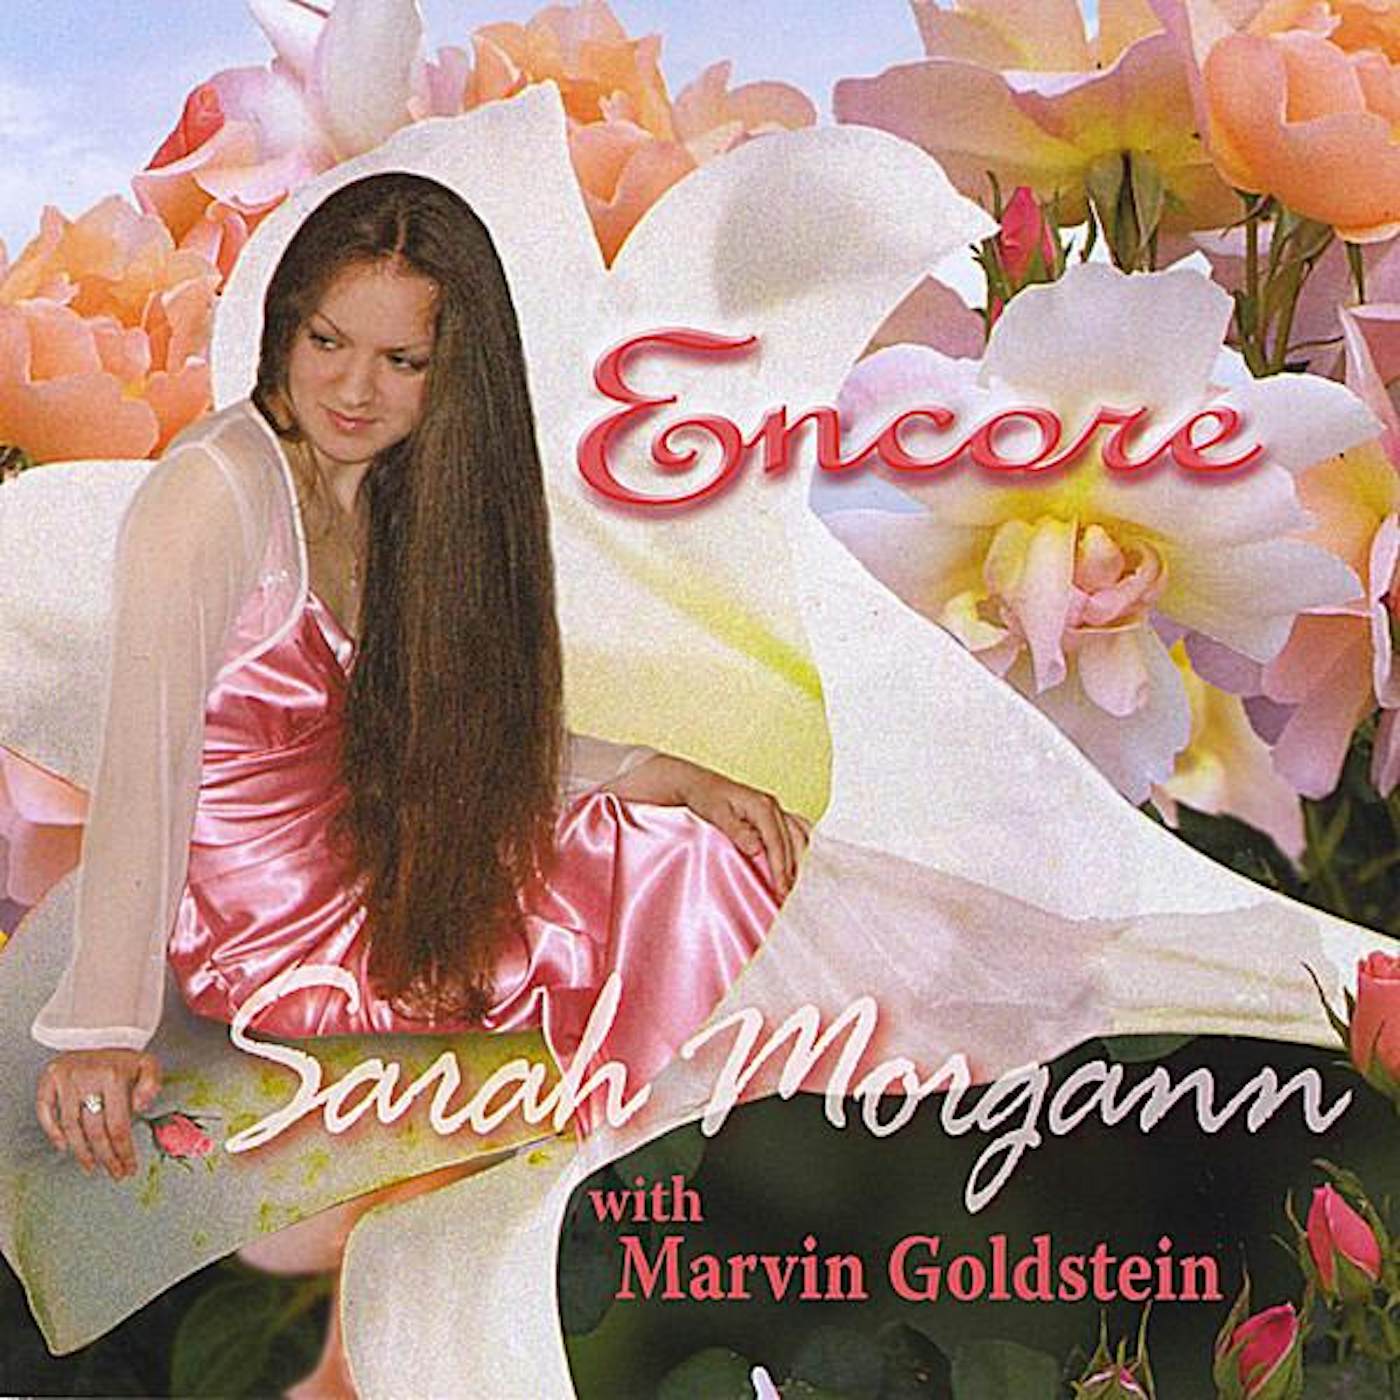 Sarah Morgann ENCORE CD